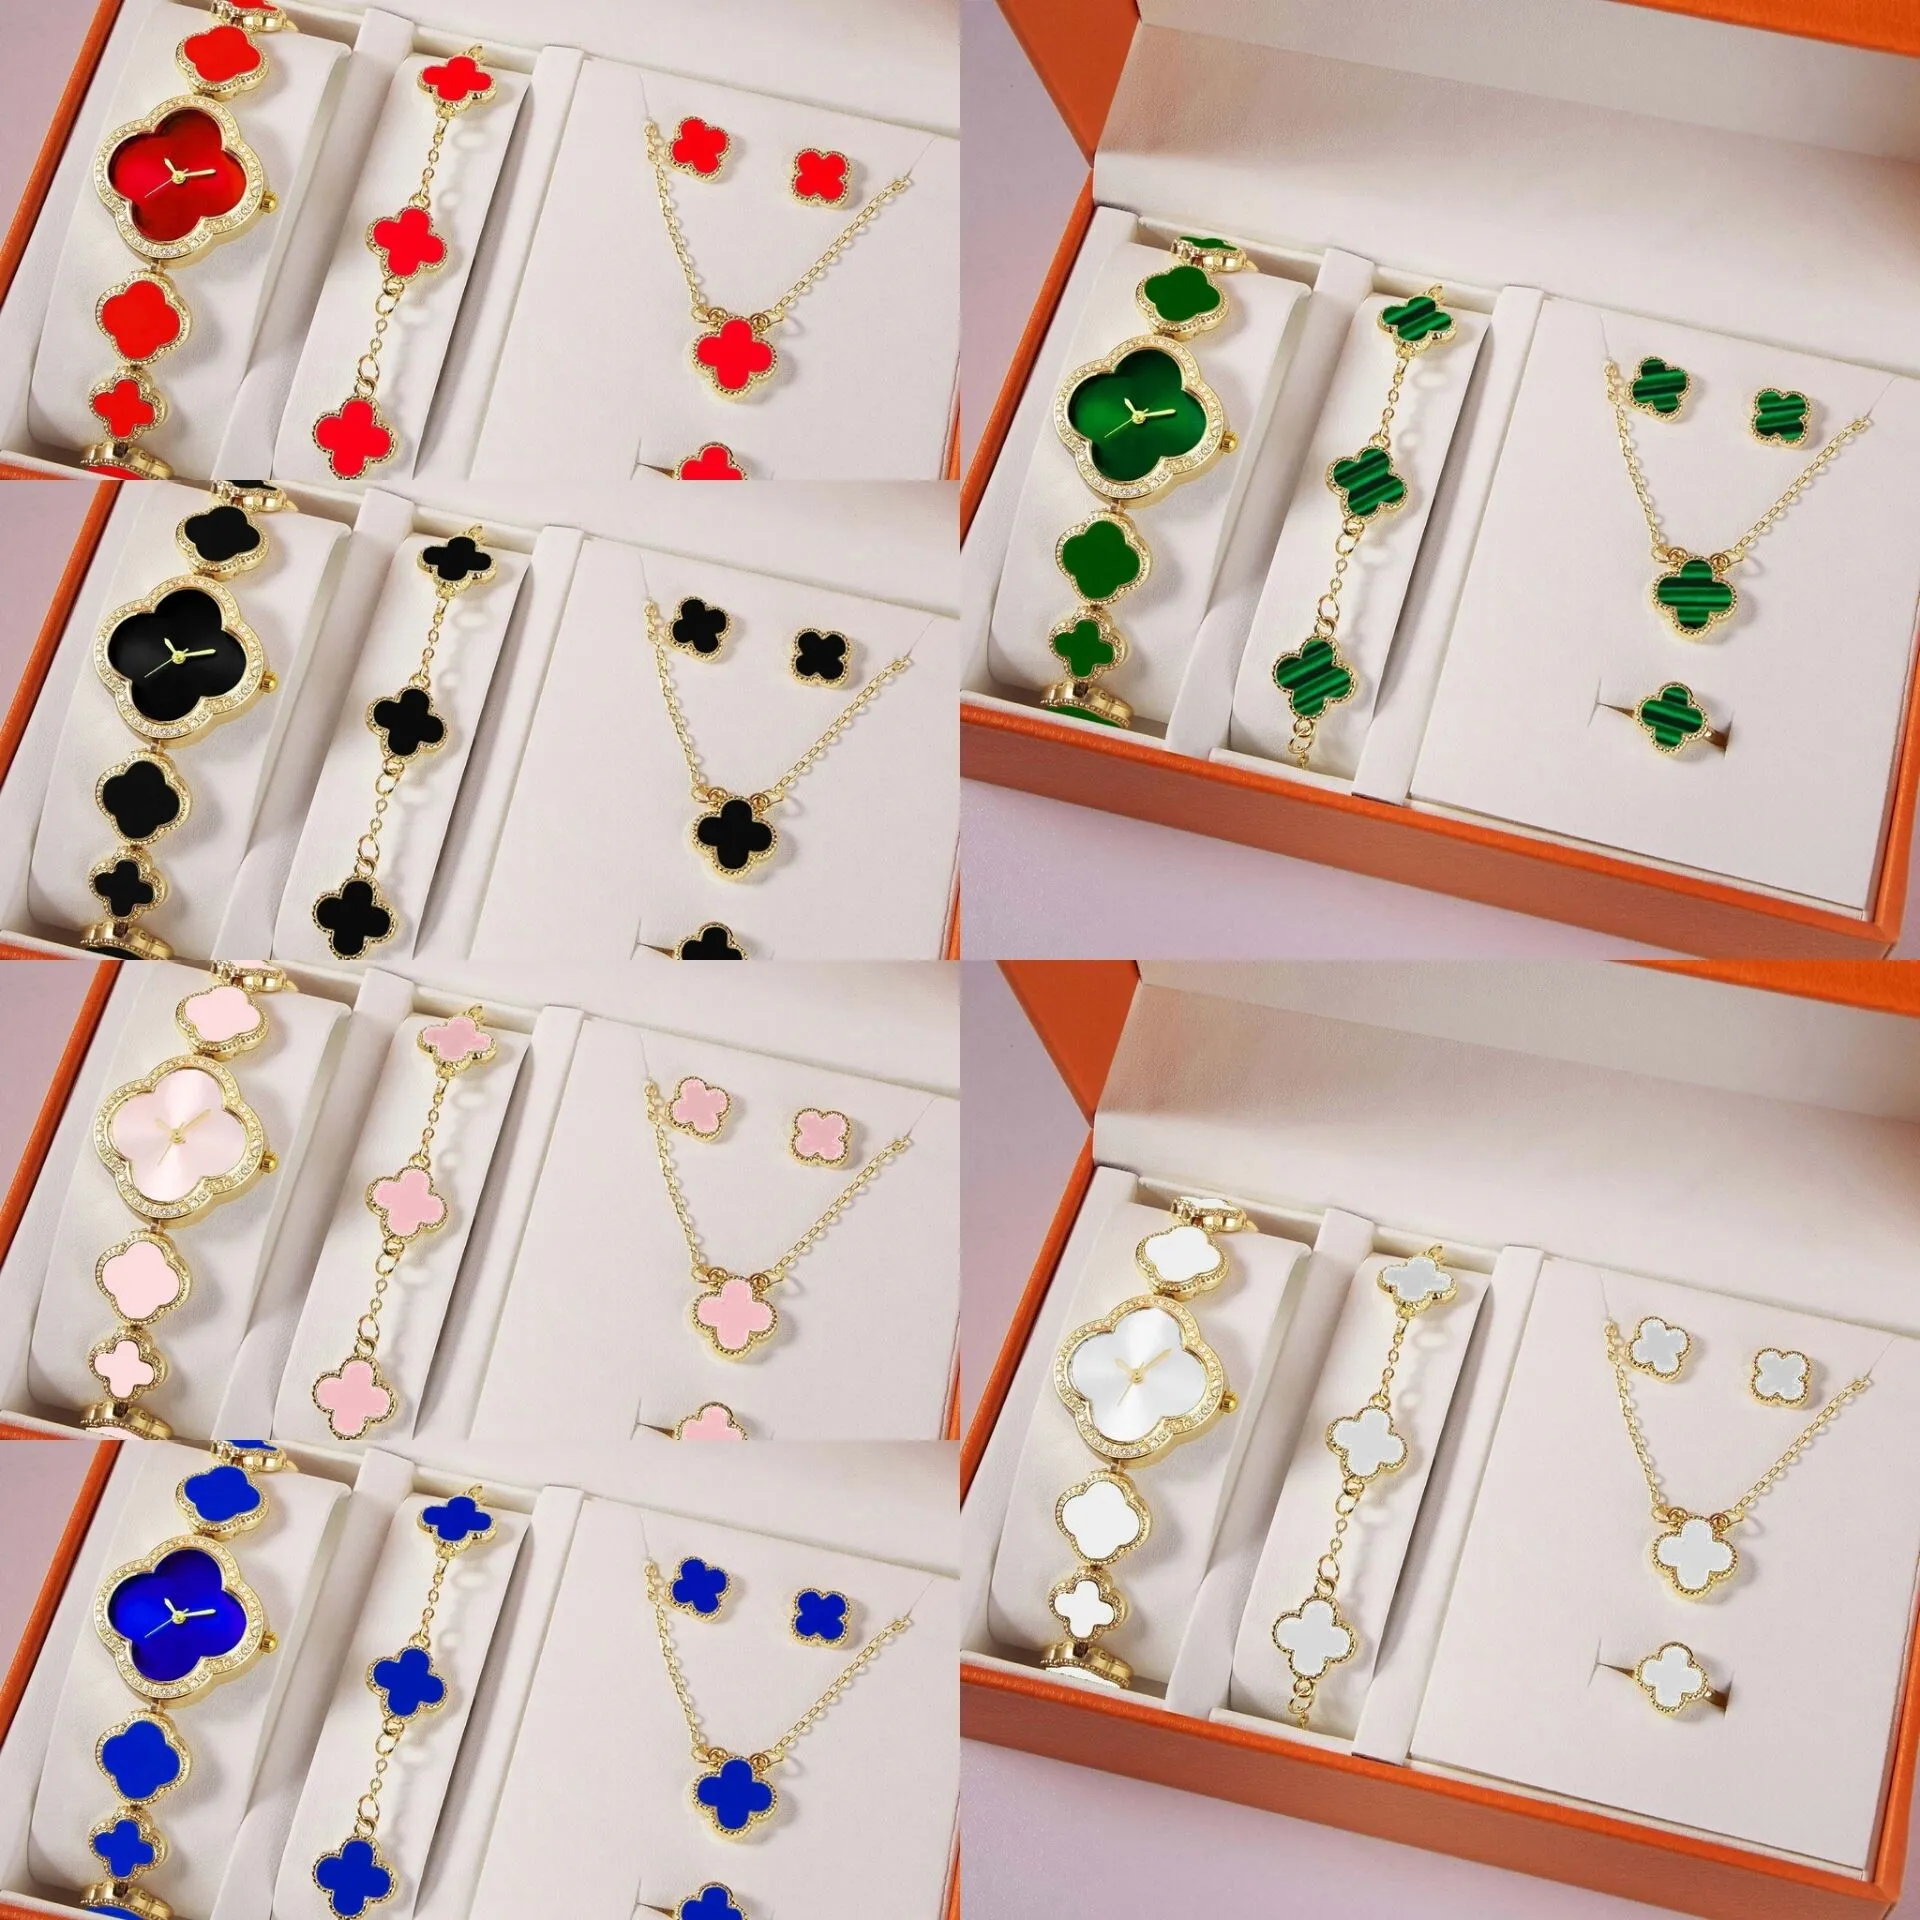 6color 4 Four Leaf Clover Luxury Designer Jewelry Sets Shell Brass Copper Women vans Bracelet Earrings Necklace Watch Birthday Gift for women girlfriend Red